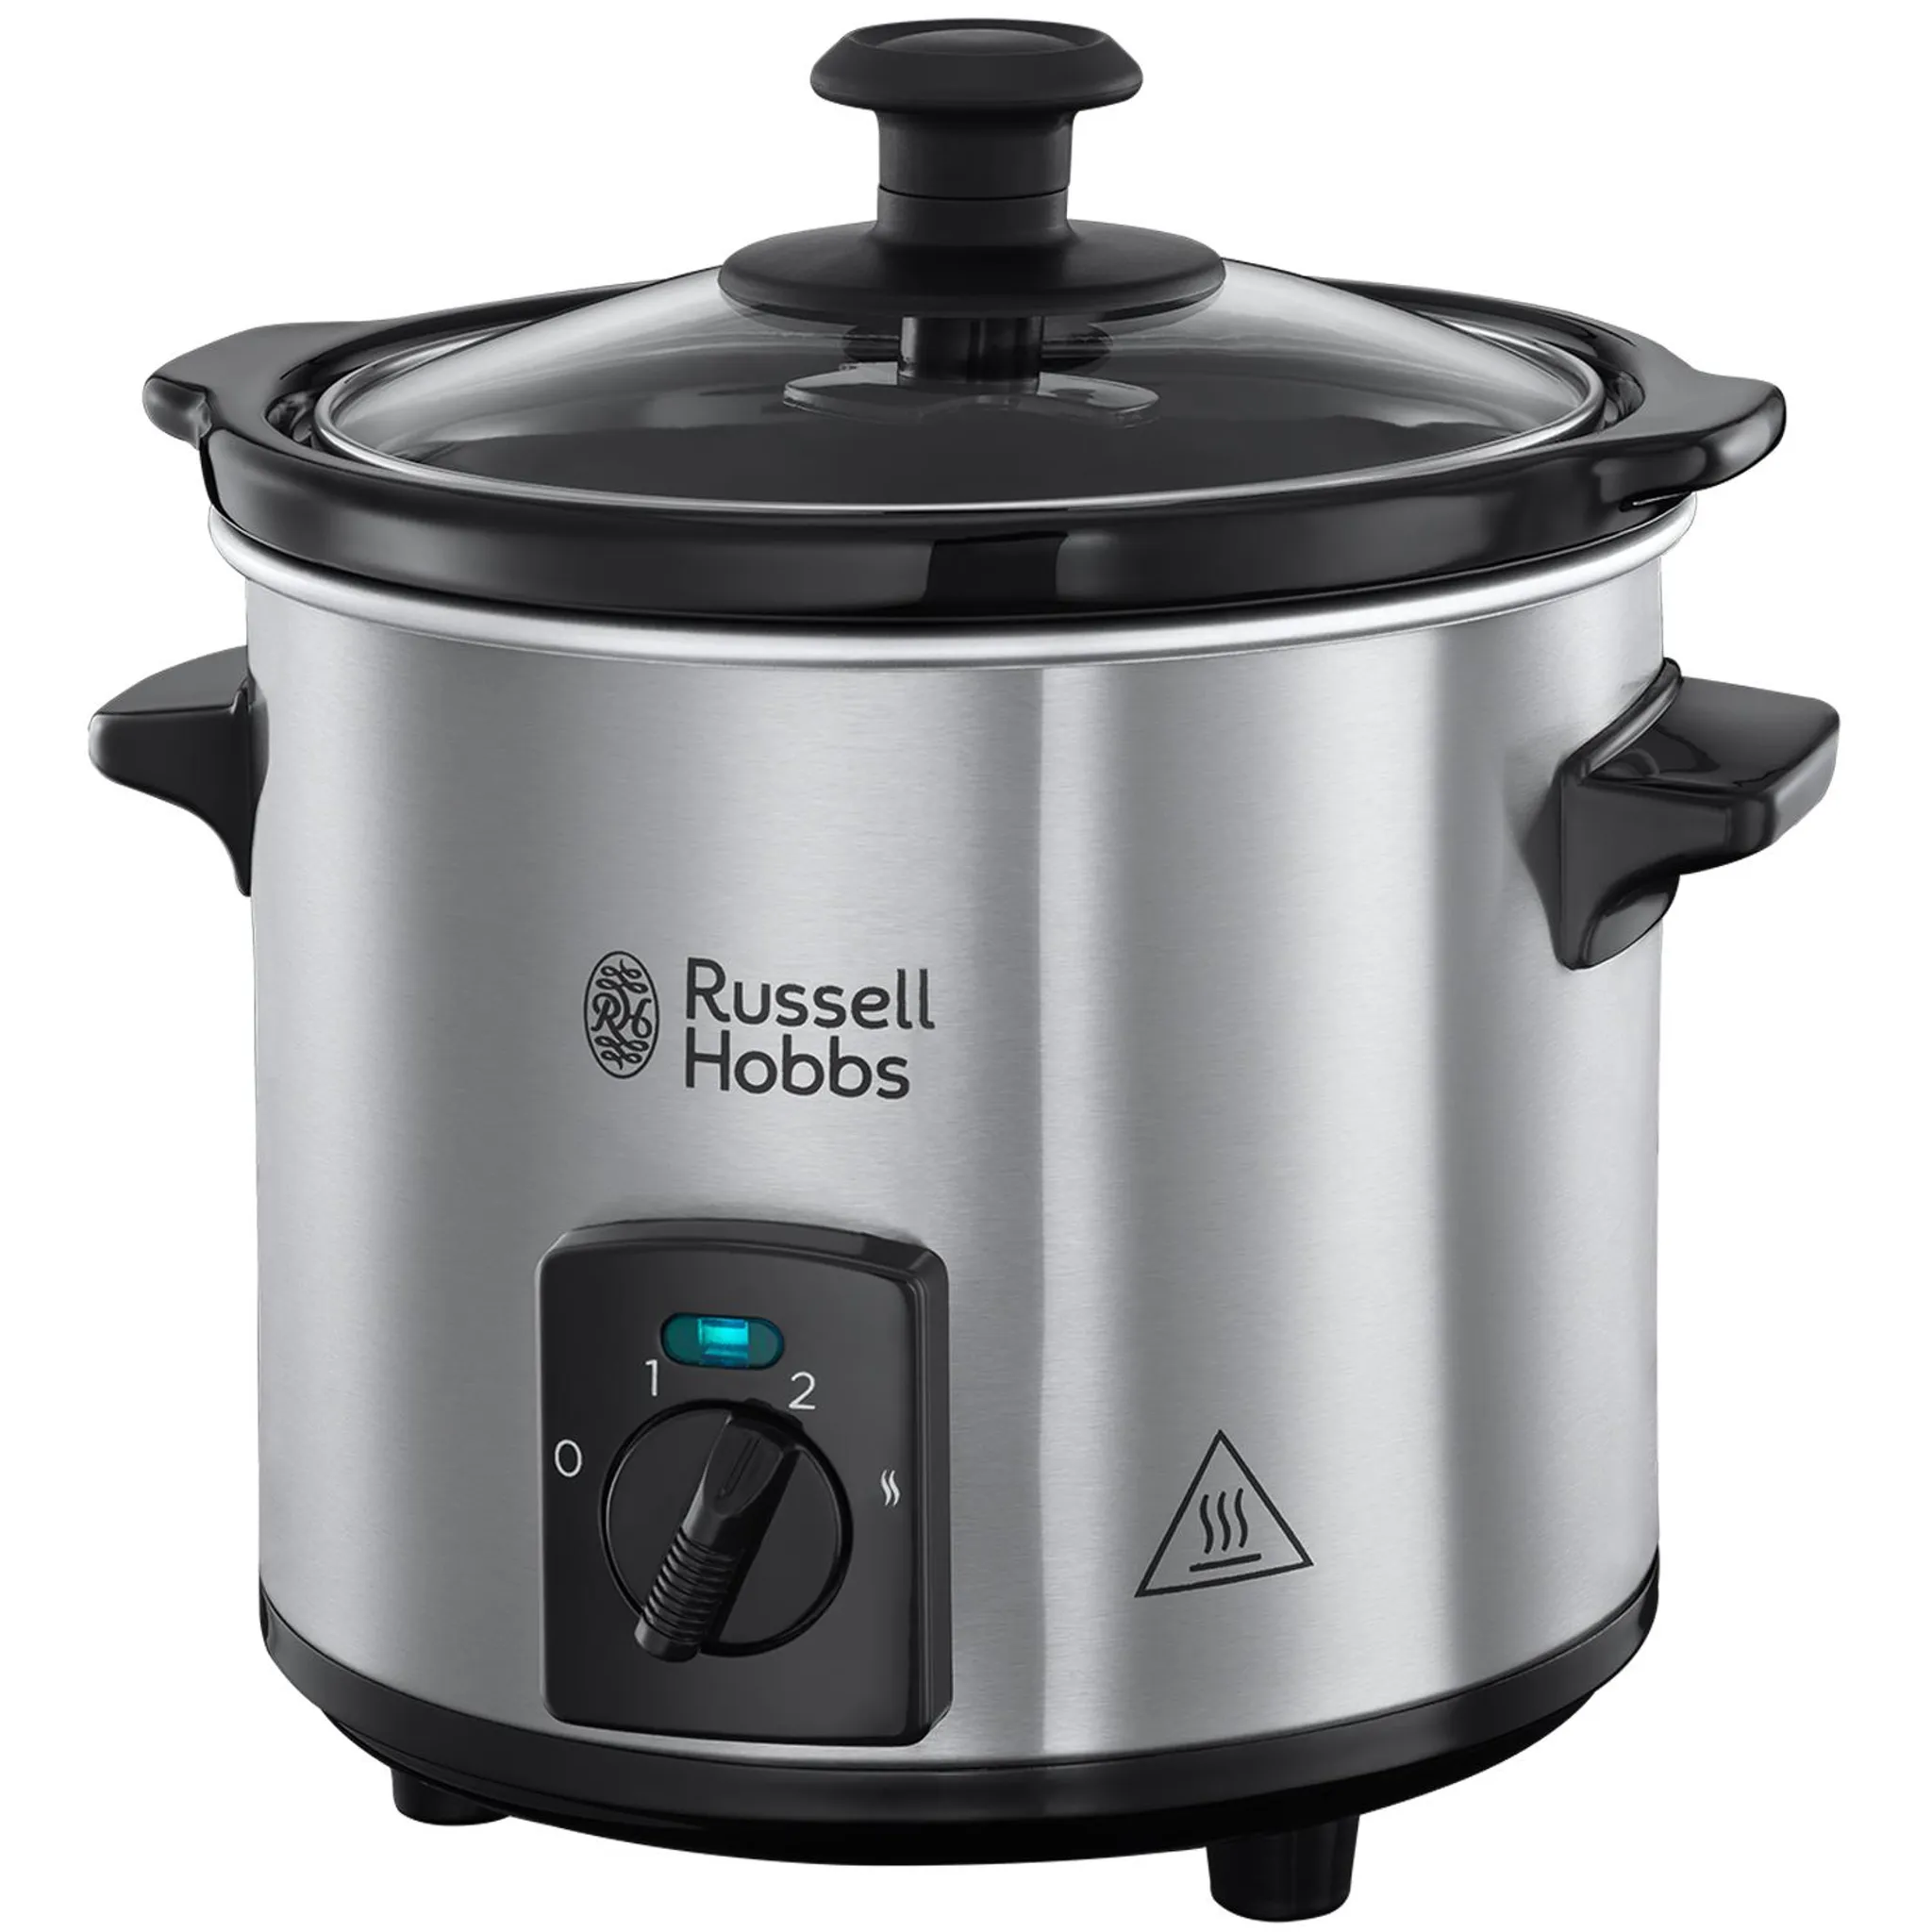 RUSSEL HOBBS 25570-56 - Compact Home Cooker